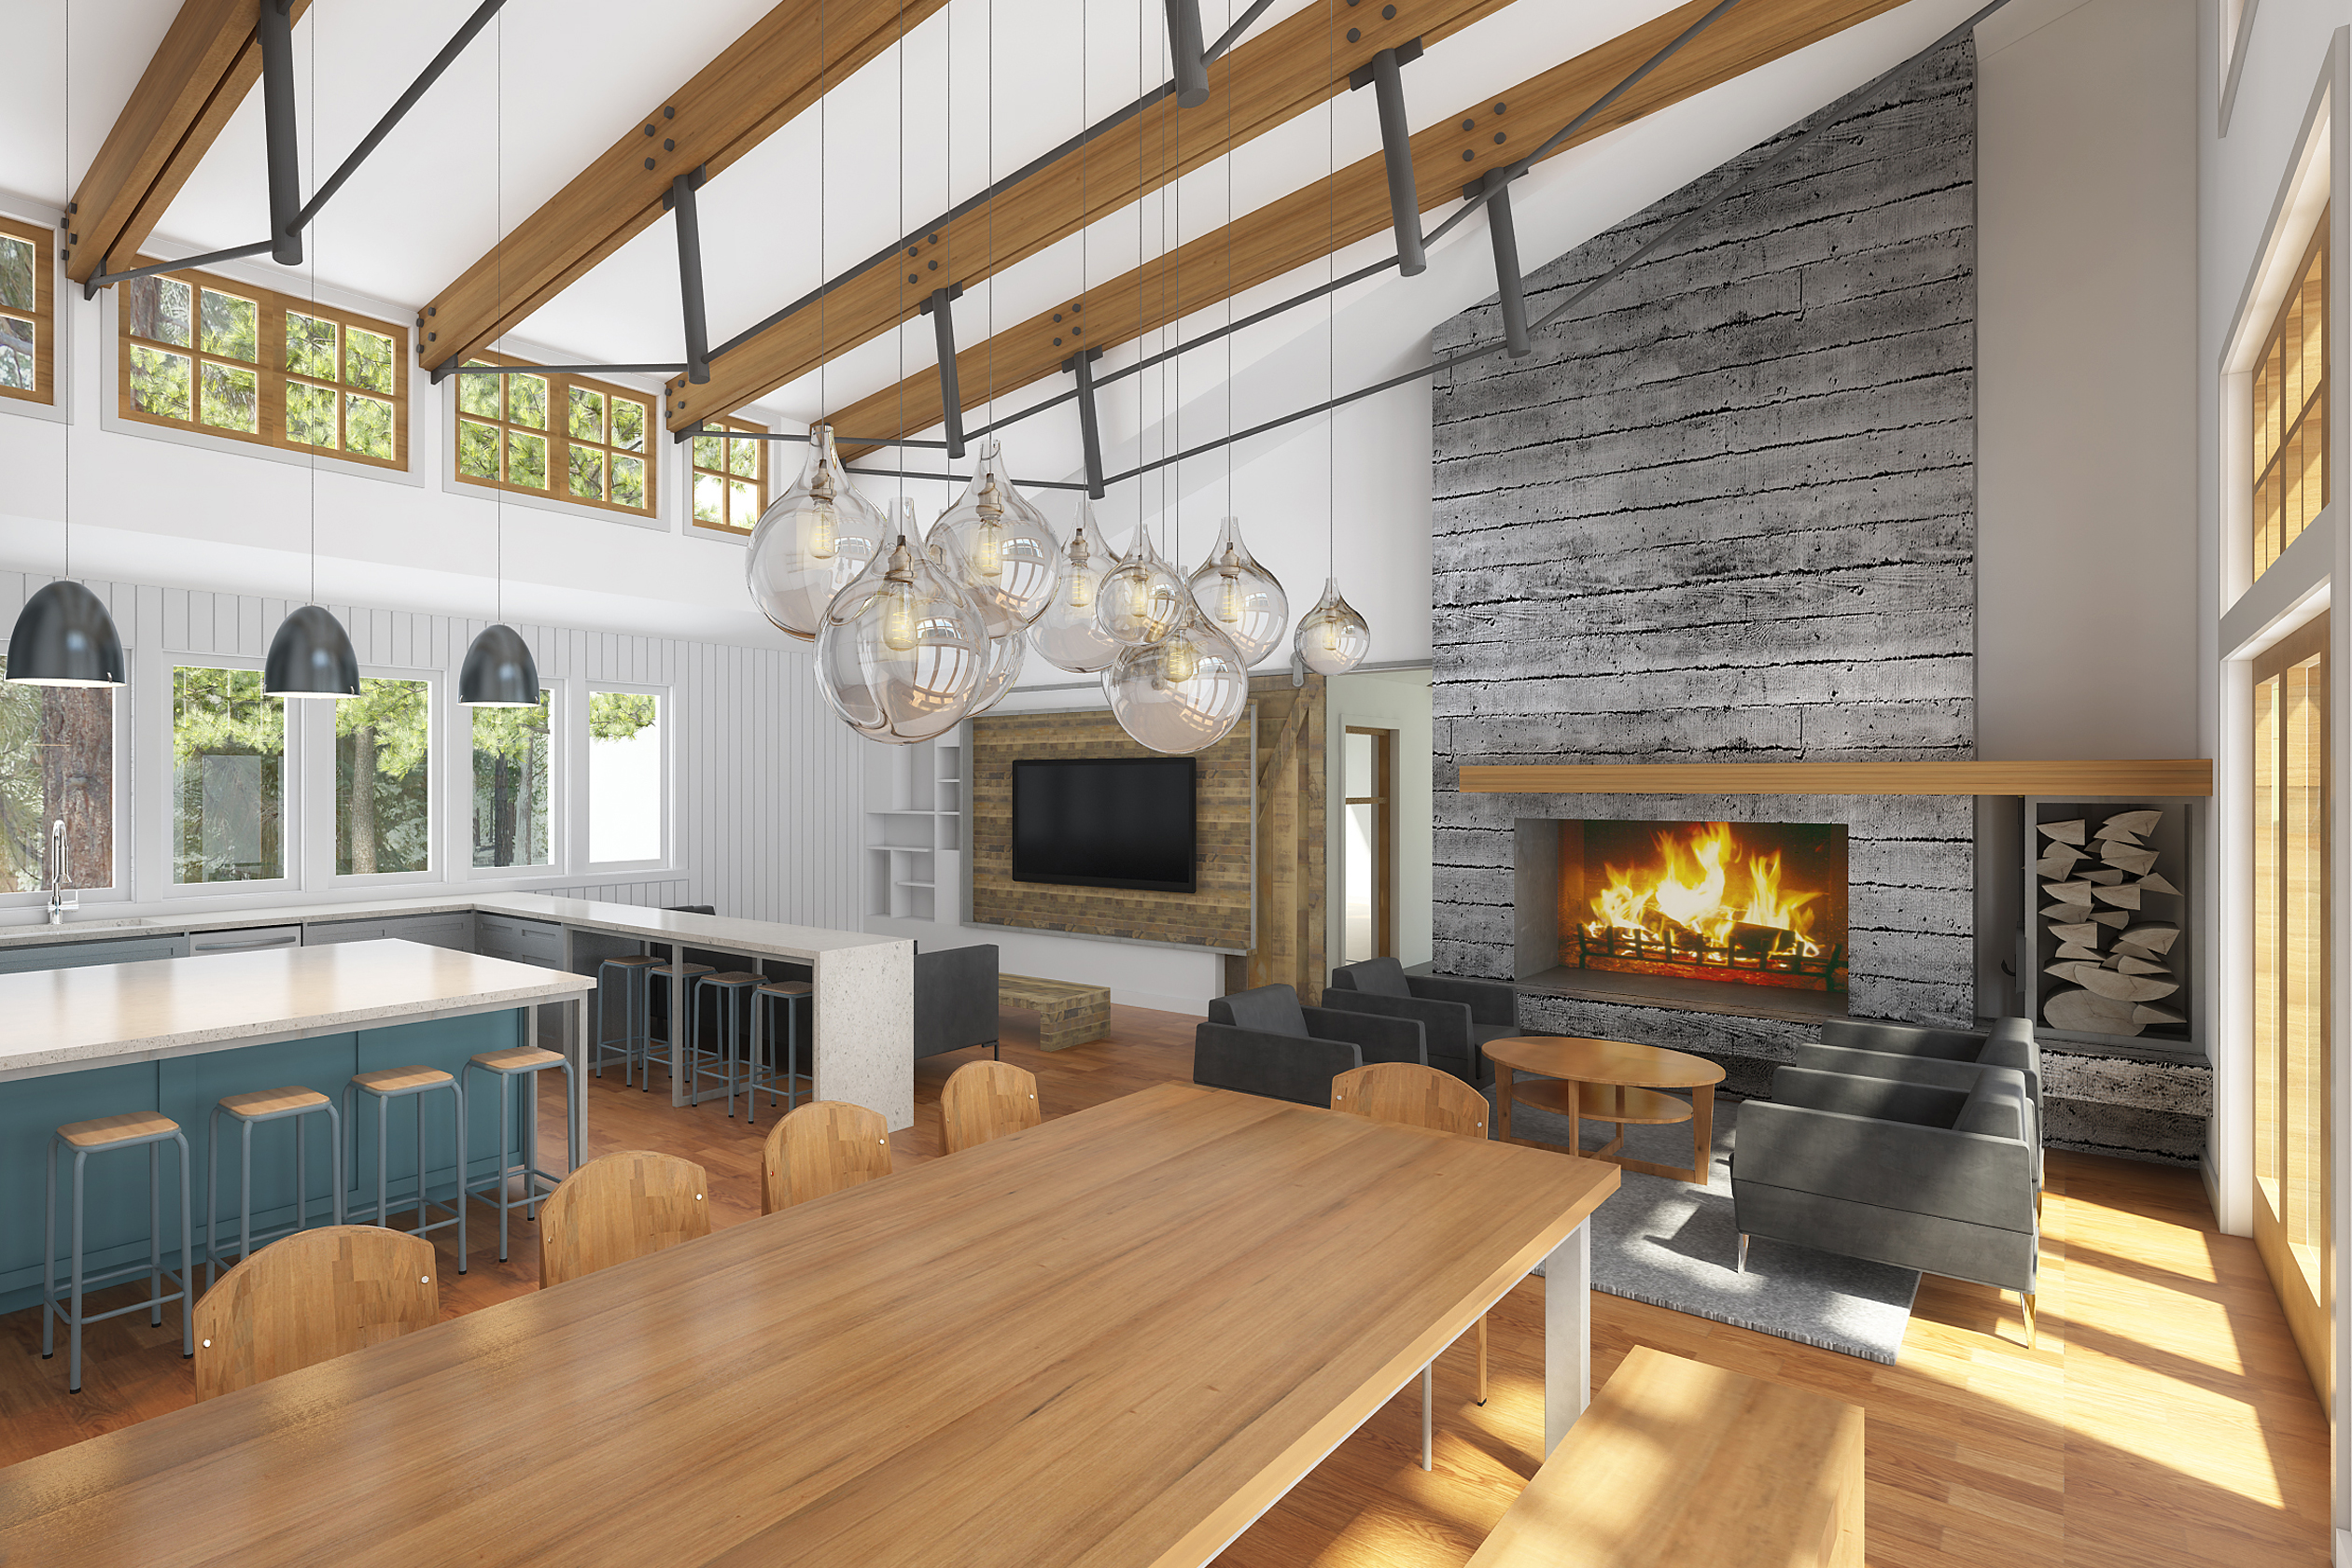 Modern Farmhouse Interior Design - BEST HOME DESIGN IDEAS